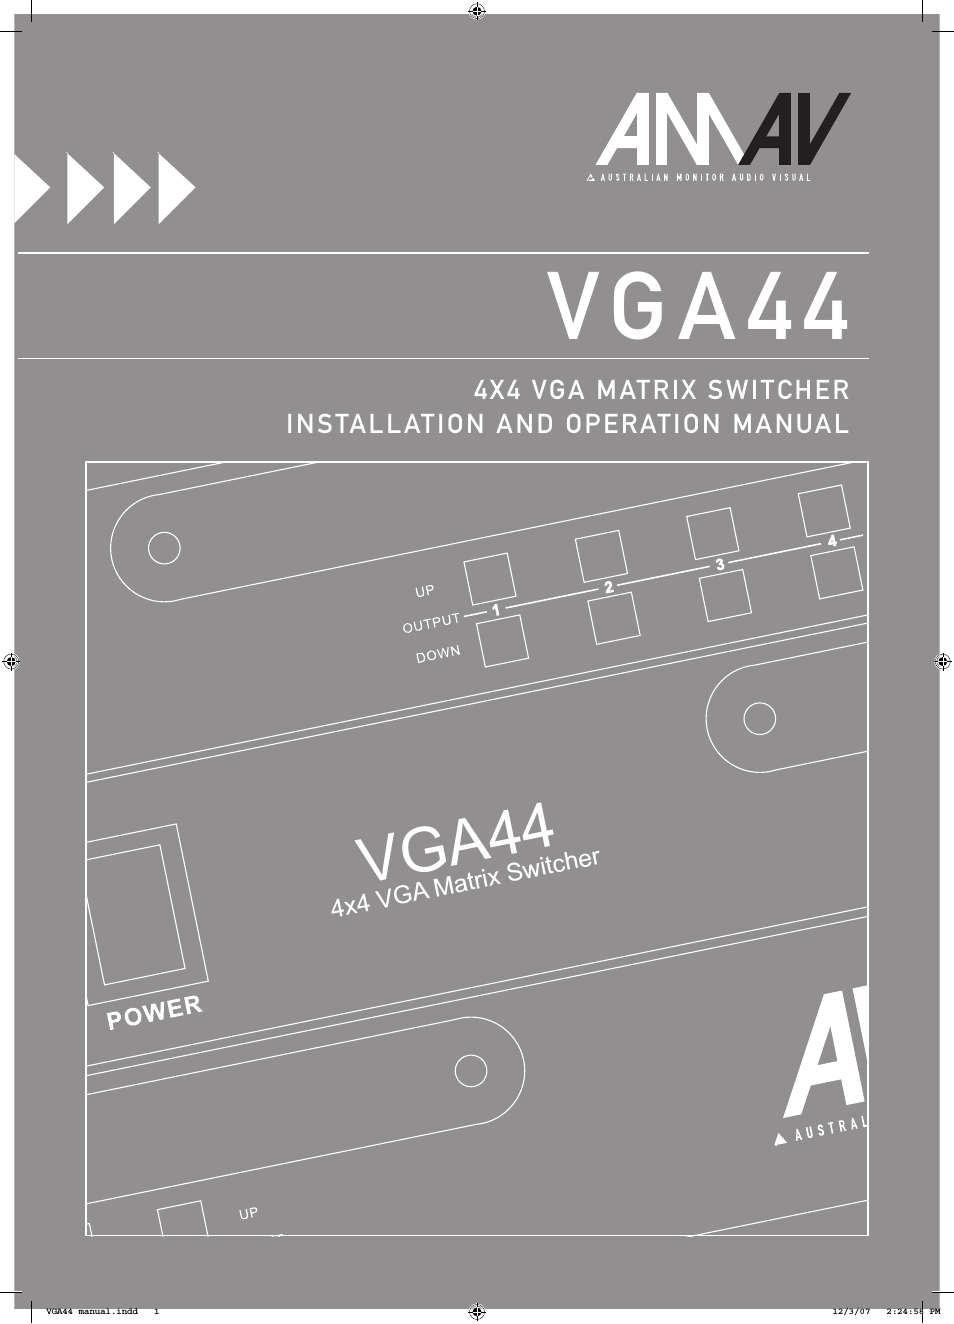 VGA44